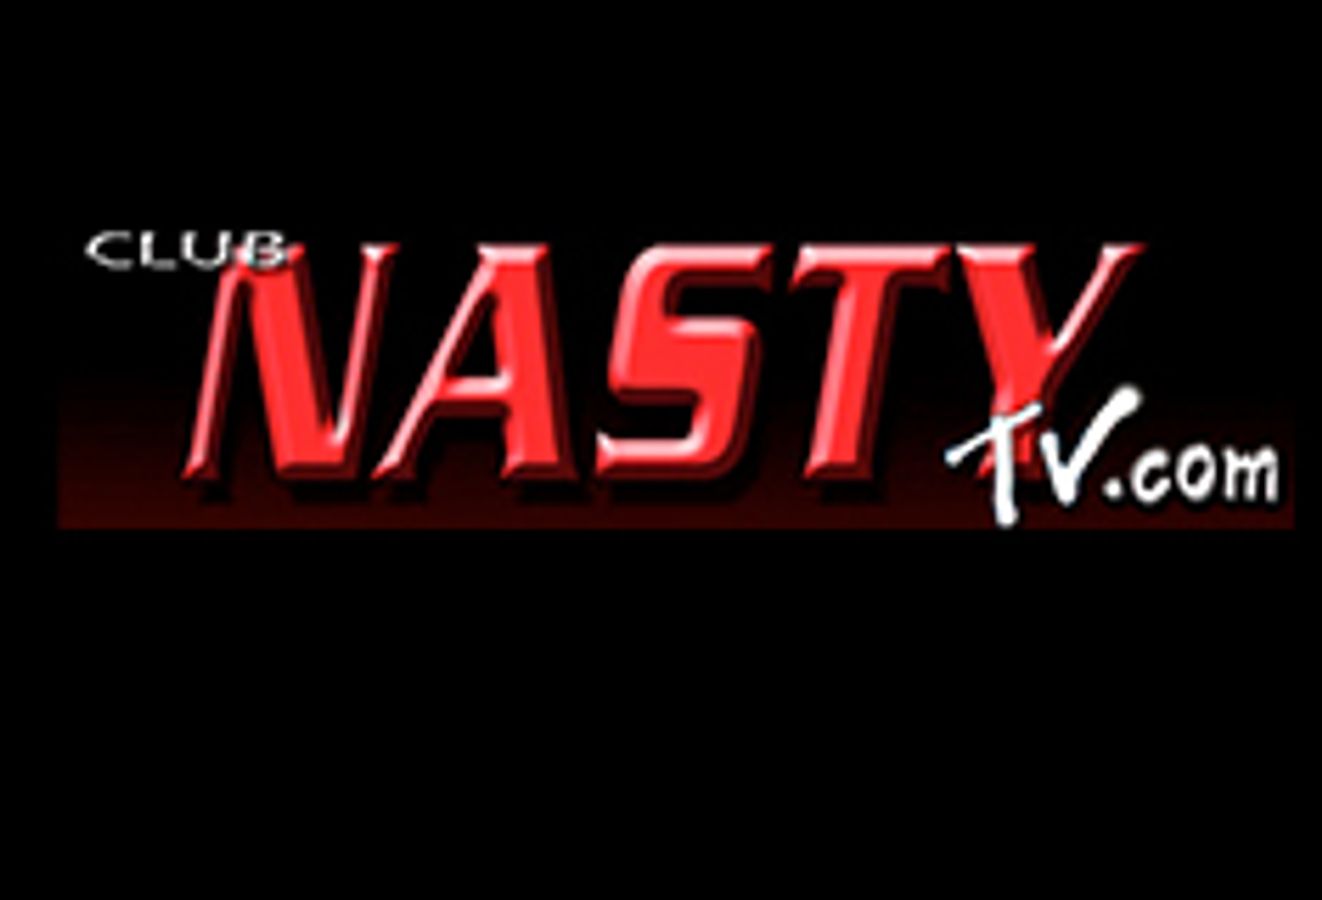 CLUB NASTY TV